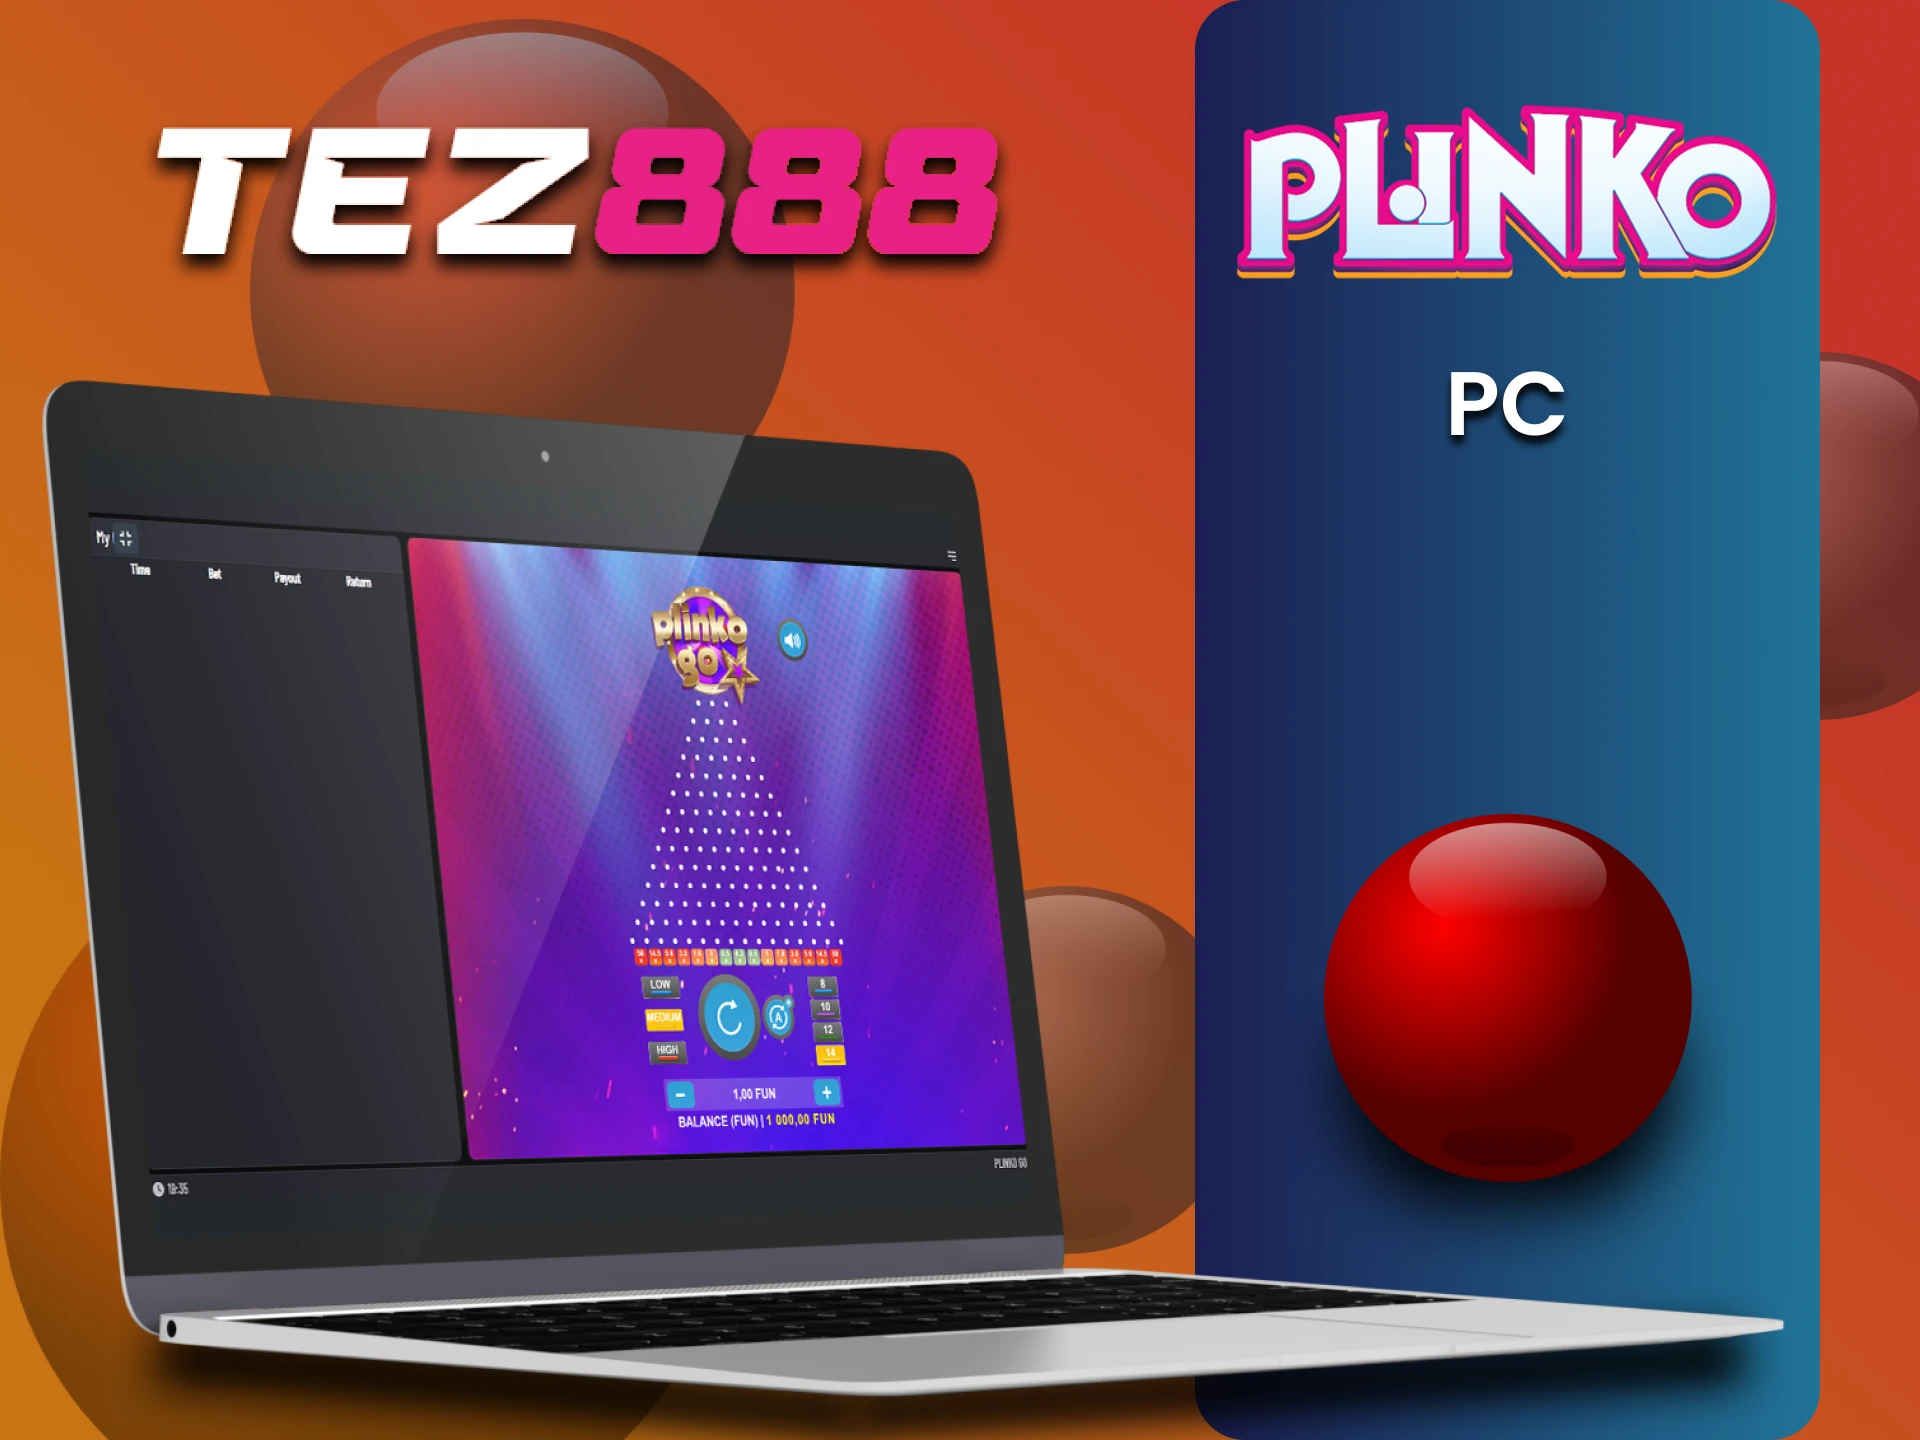 Use your PC to play Plinko on Tez888.